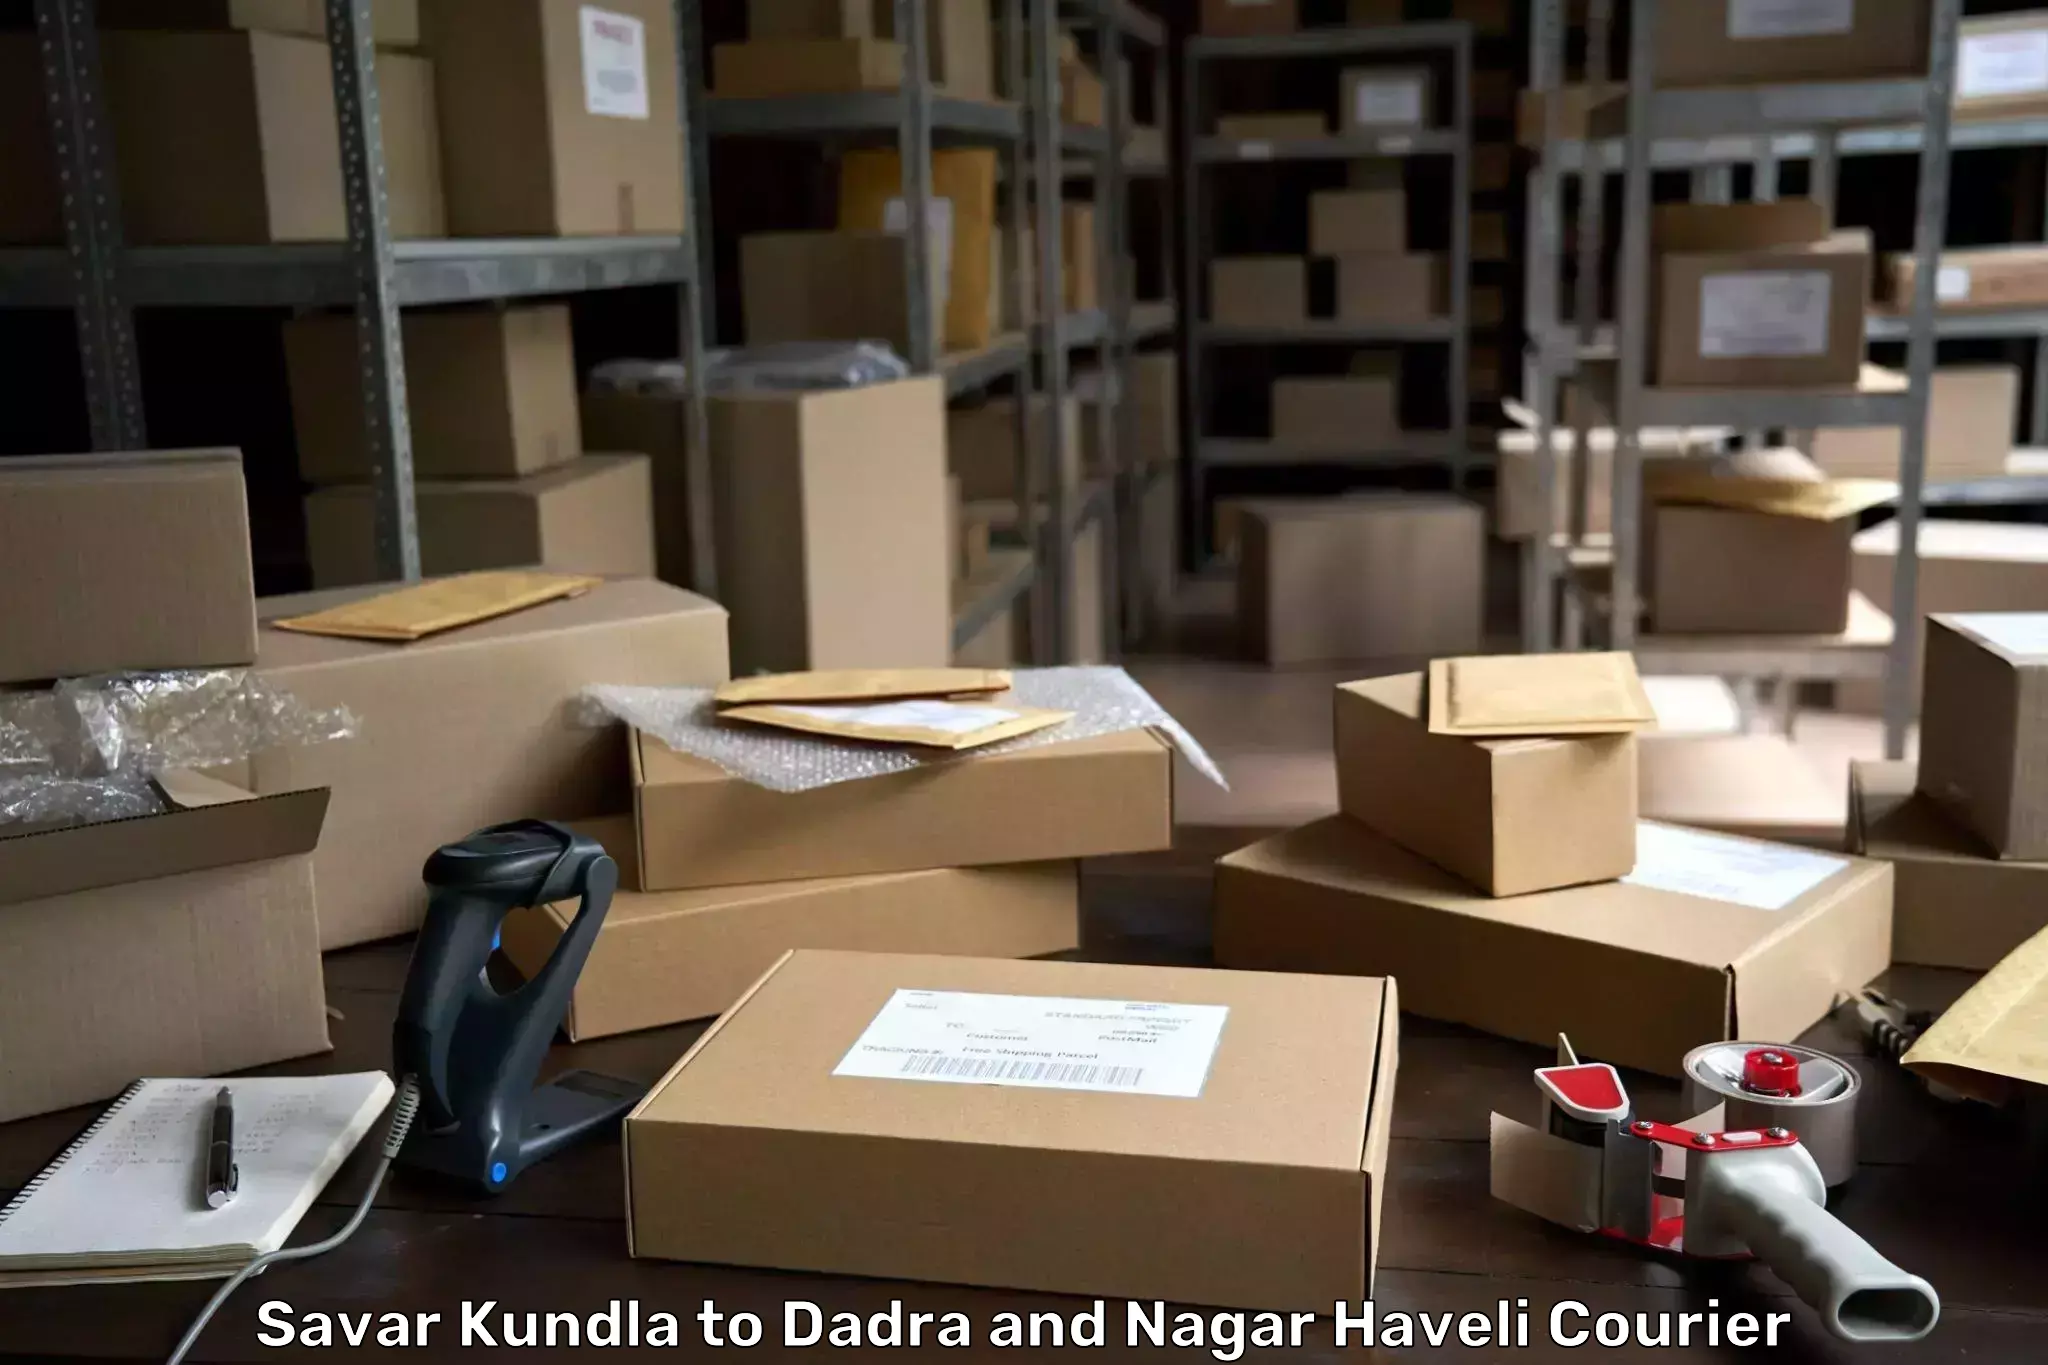 Advanced package delivery Savar Kundla to Dadra and Nagar Haveli